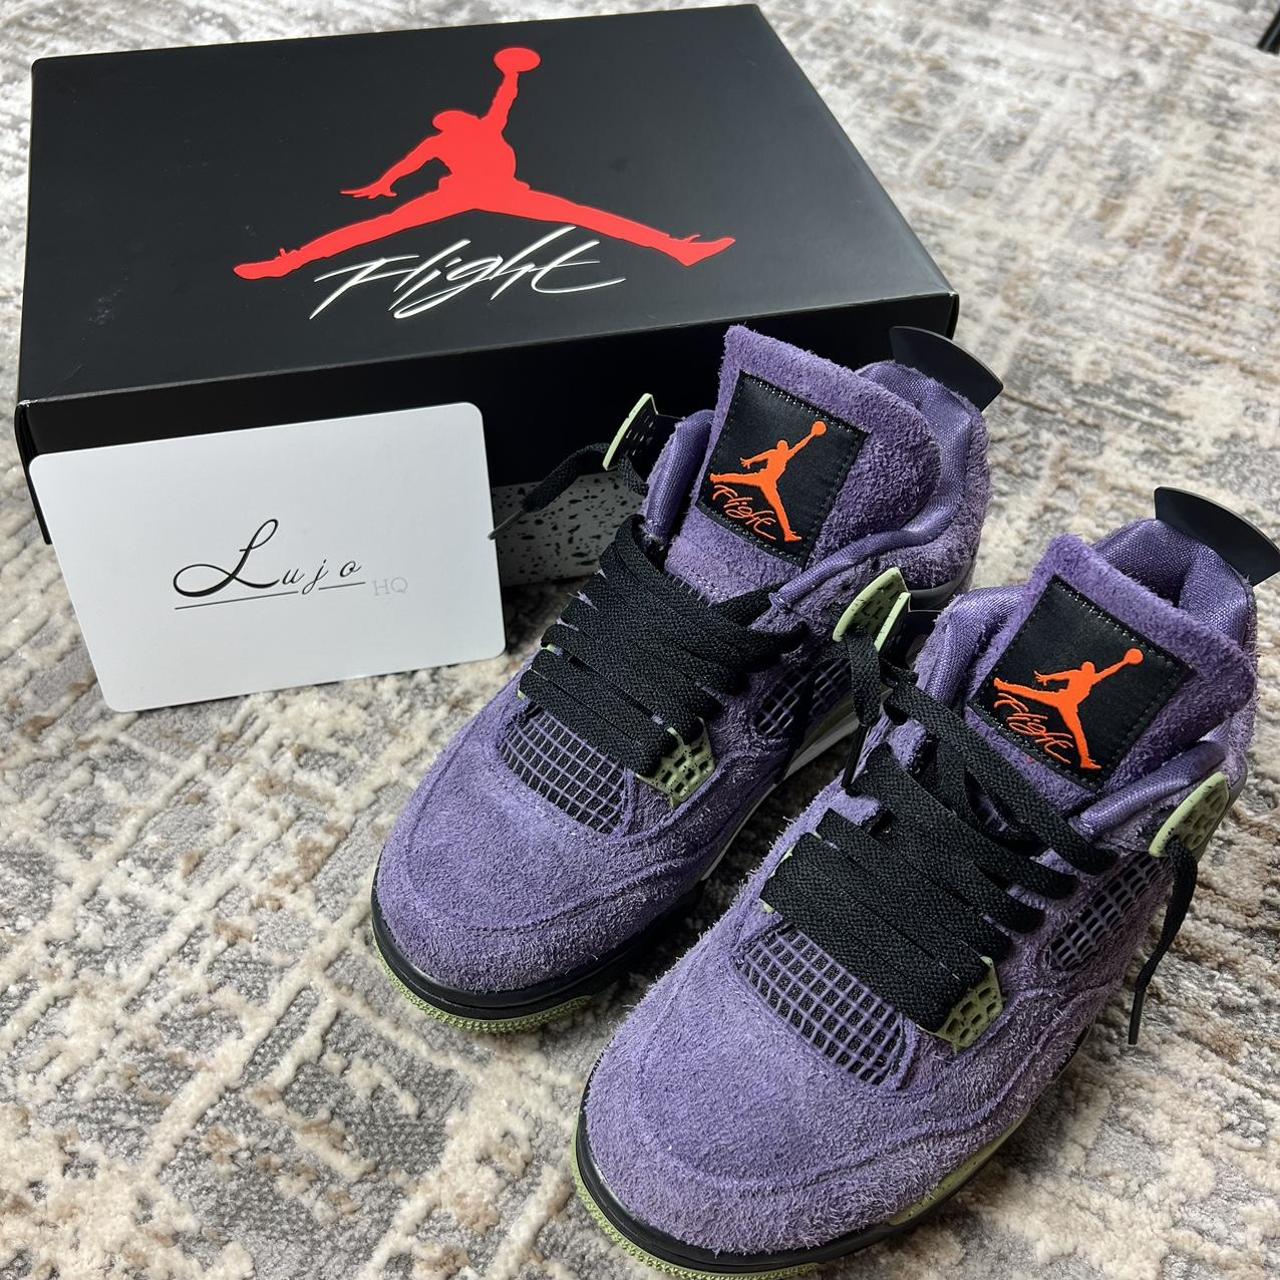 Jordan 4 ‘Canyon Purple’ All sizes available, send... - Depop